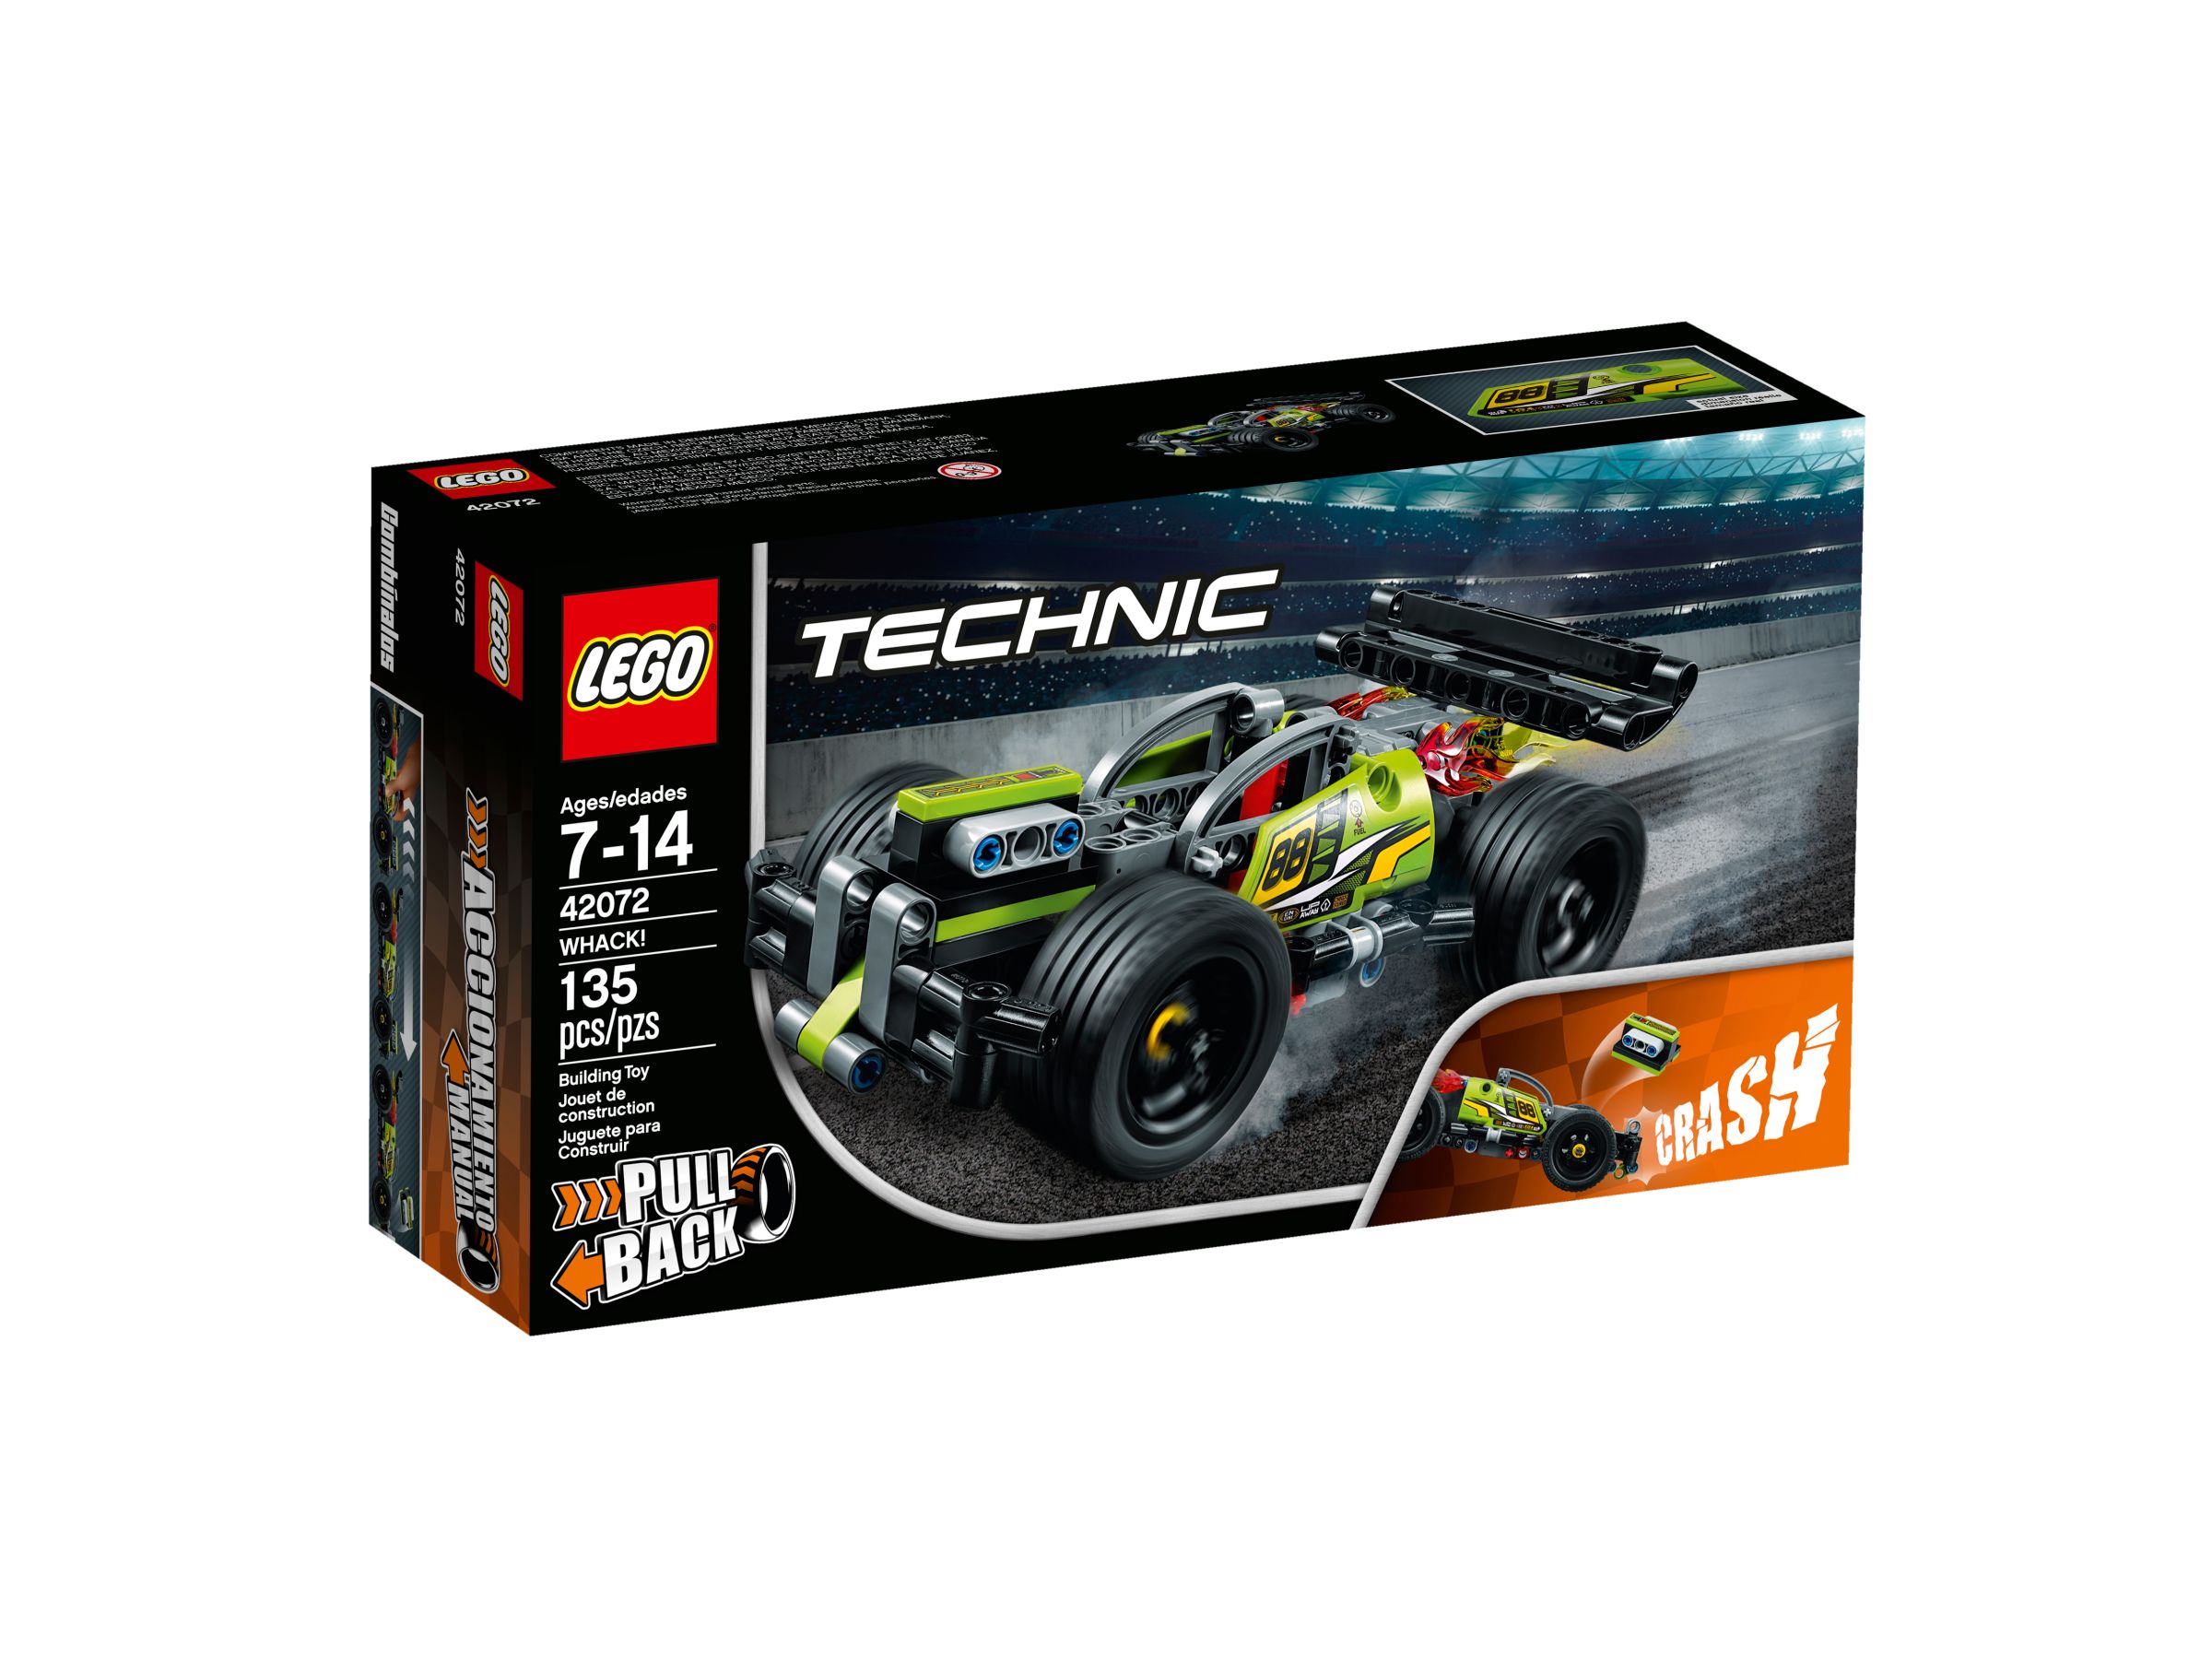 LEGO Technic 42072 ZACK! LEGO_42072_alt1.jpg